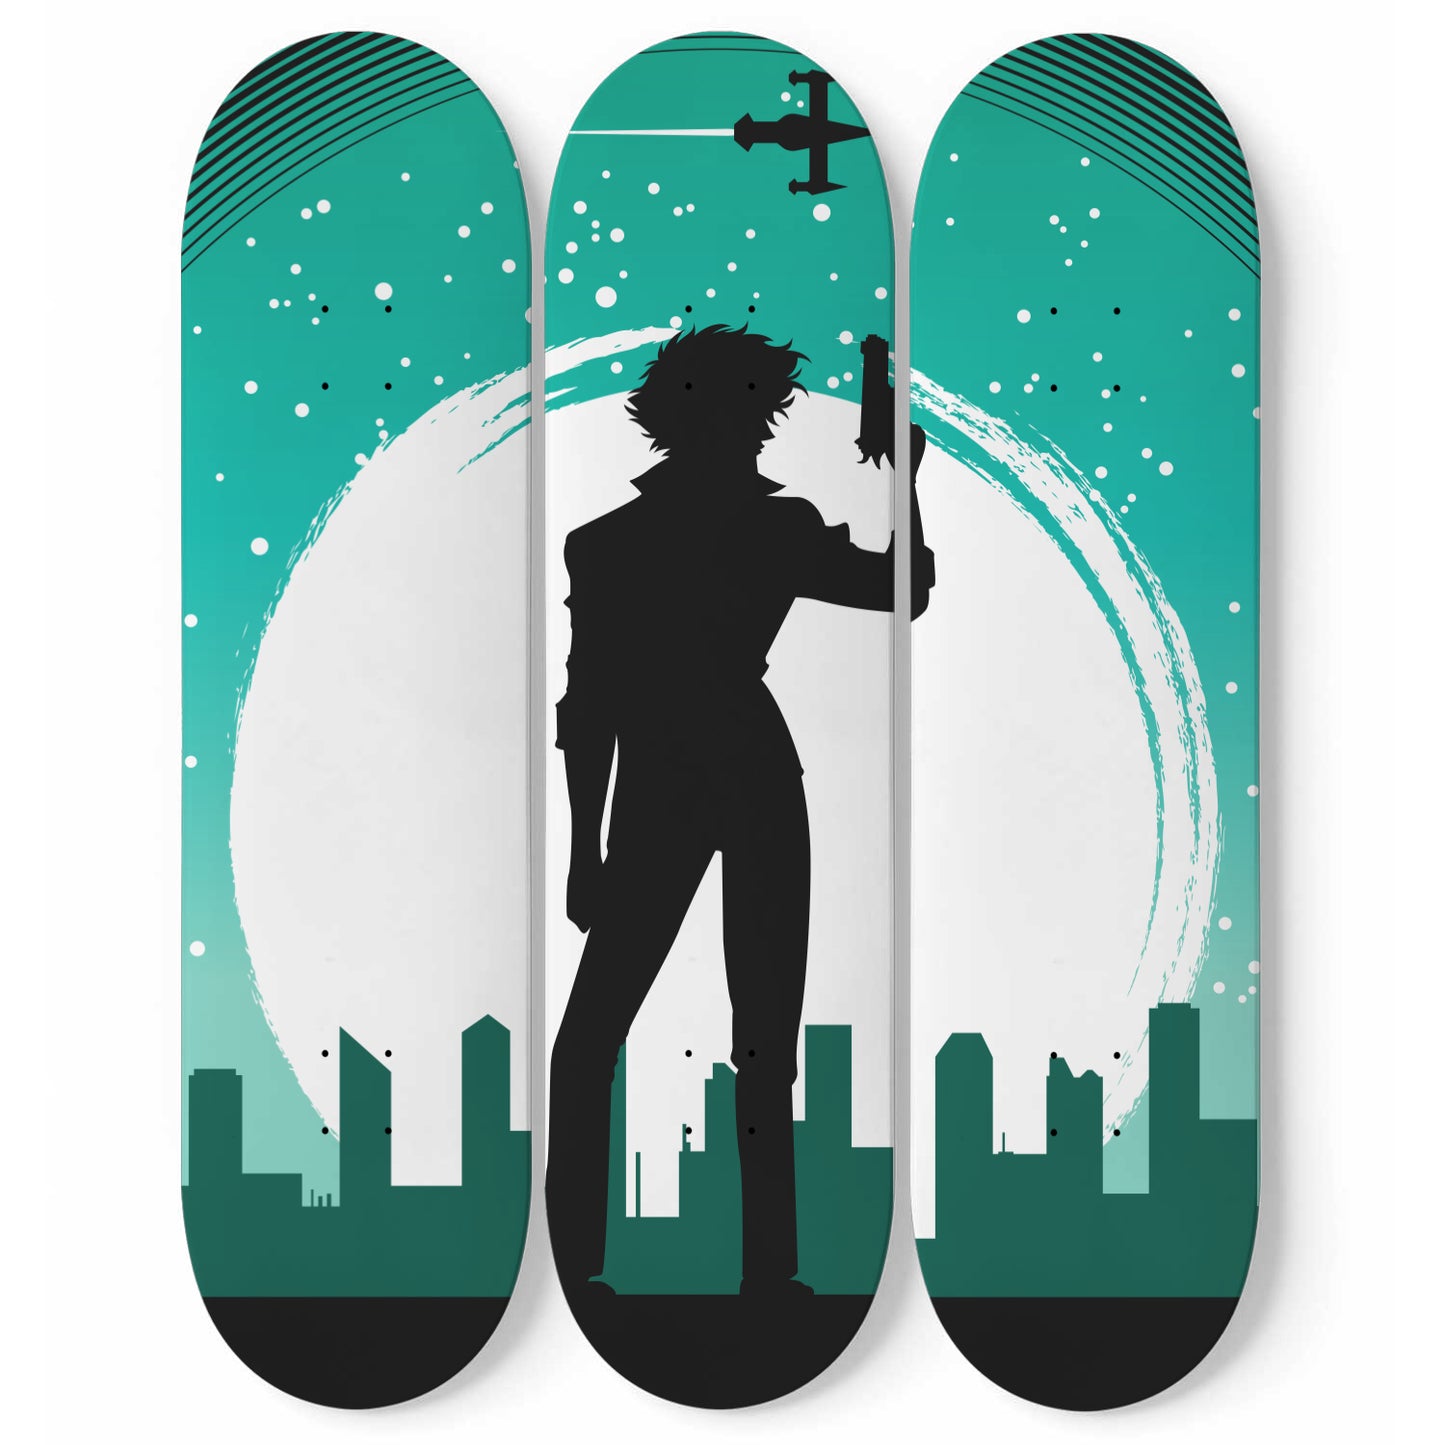 Spike Spiegel In The City  | Wall Art -Cowboy Bebop Inspired | Japanese Neo Noir Science Fiction Anime Inspired | 3 Piece Skateboard Wall Art, Deck Art | Wall Hanging Decor | Custom Painted Wall Art